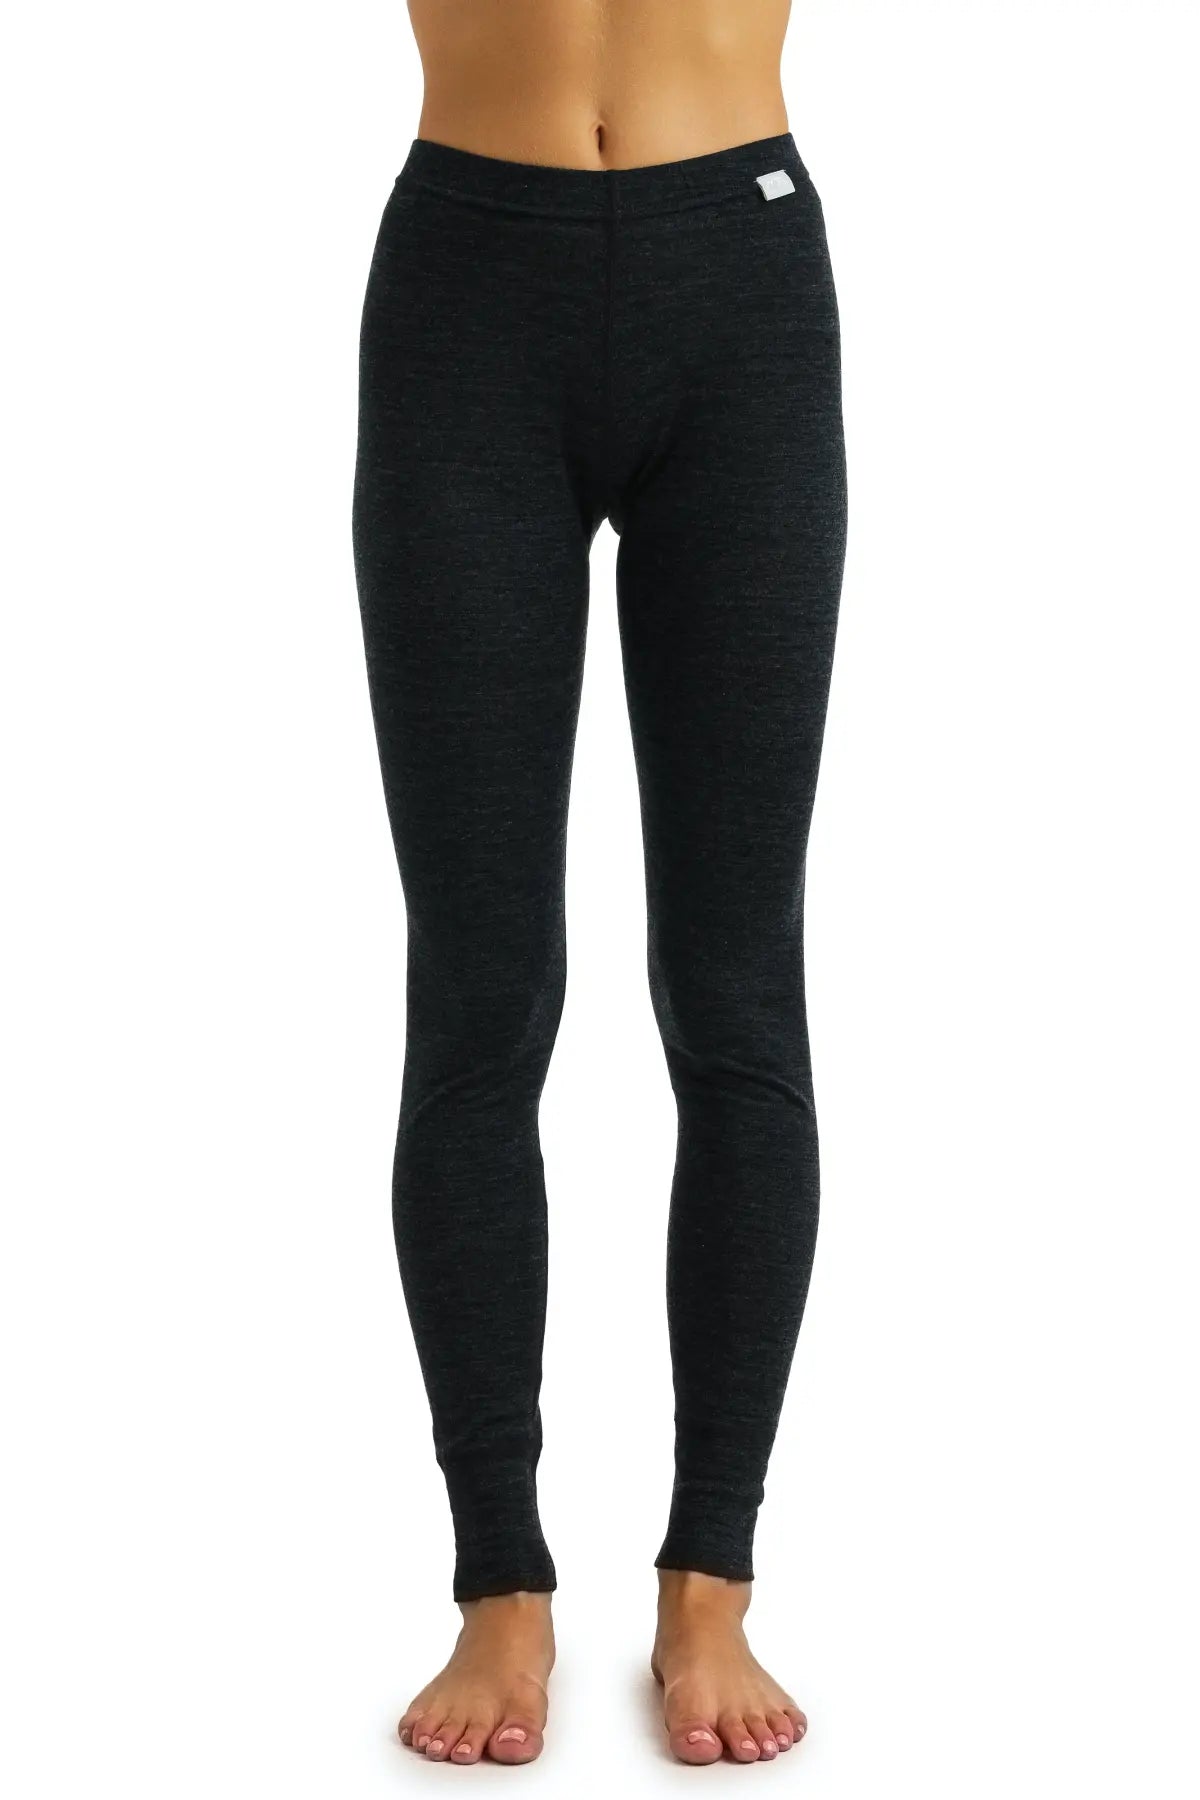 Women's Merino Wool Pants - Base Layer Chocolate, Bottom, Underwear, Thermal  Leggings, Midweight